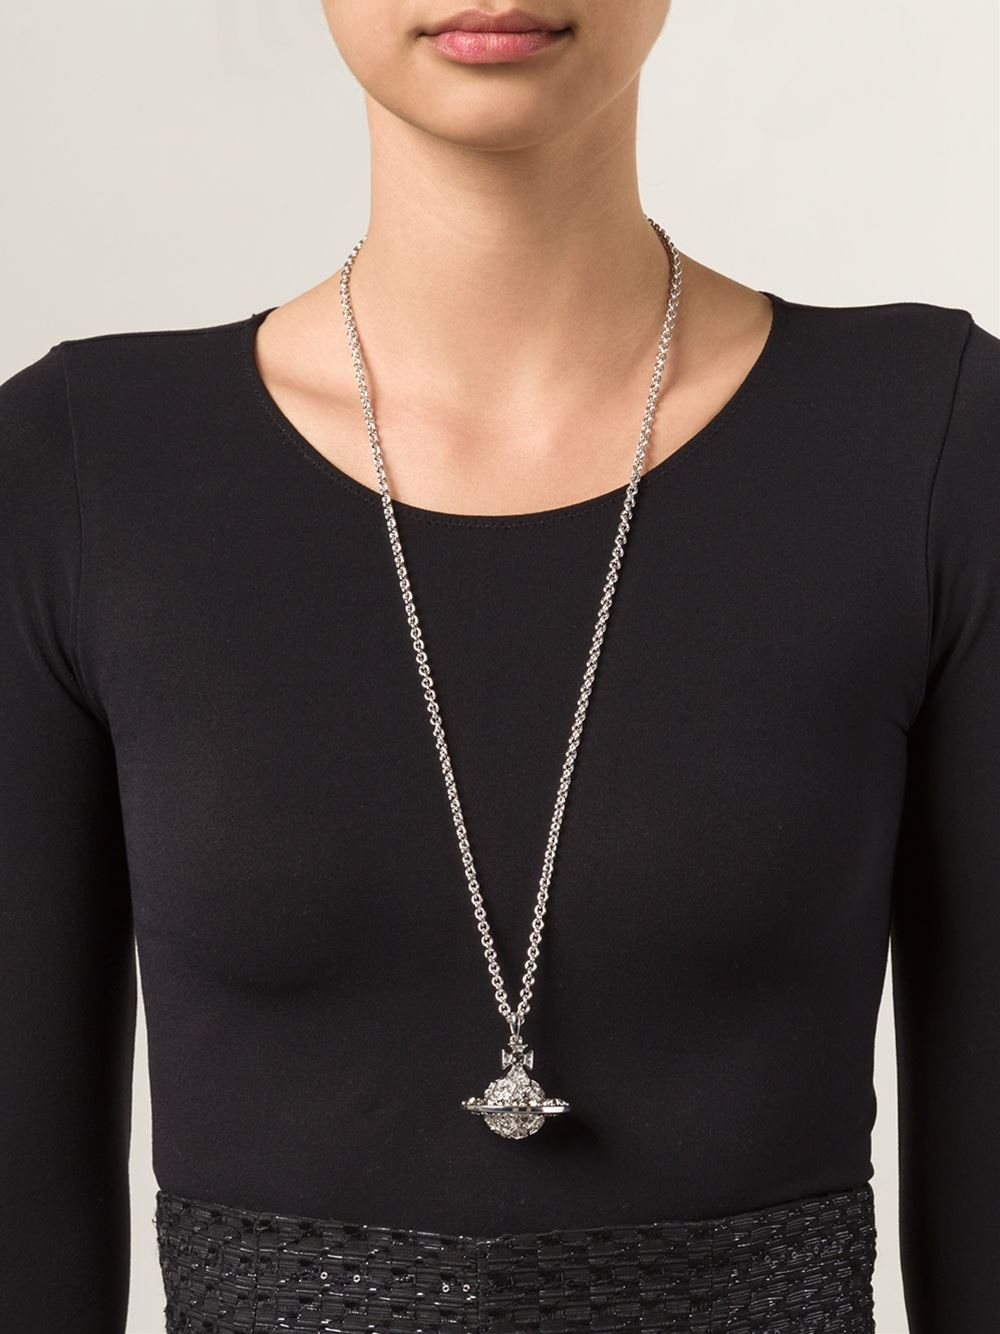 Vivienne Westwood 'Thalia Orb' Necklace in Metallic - Lyst